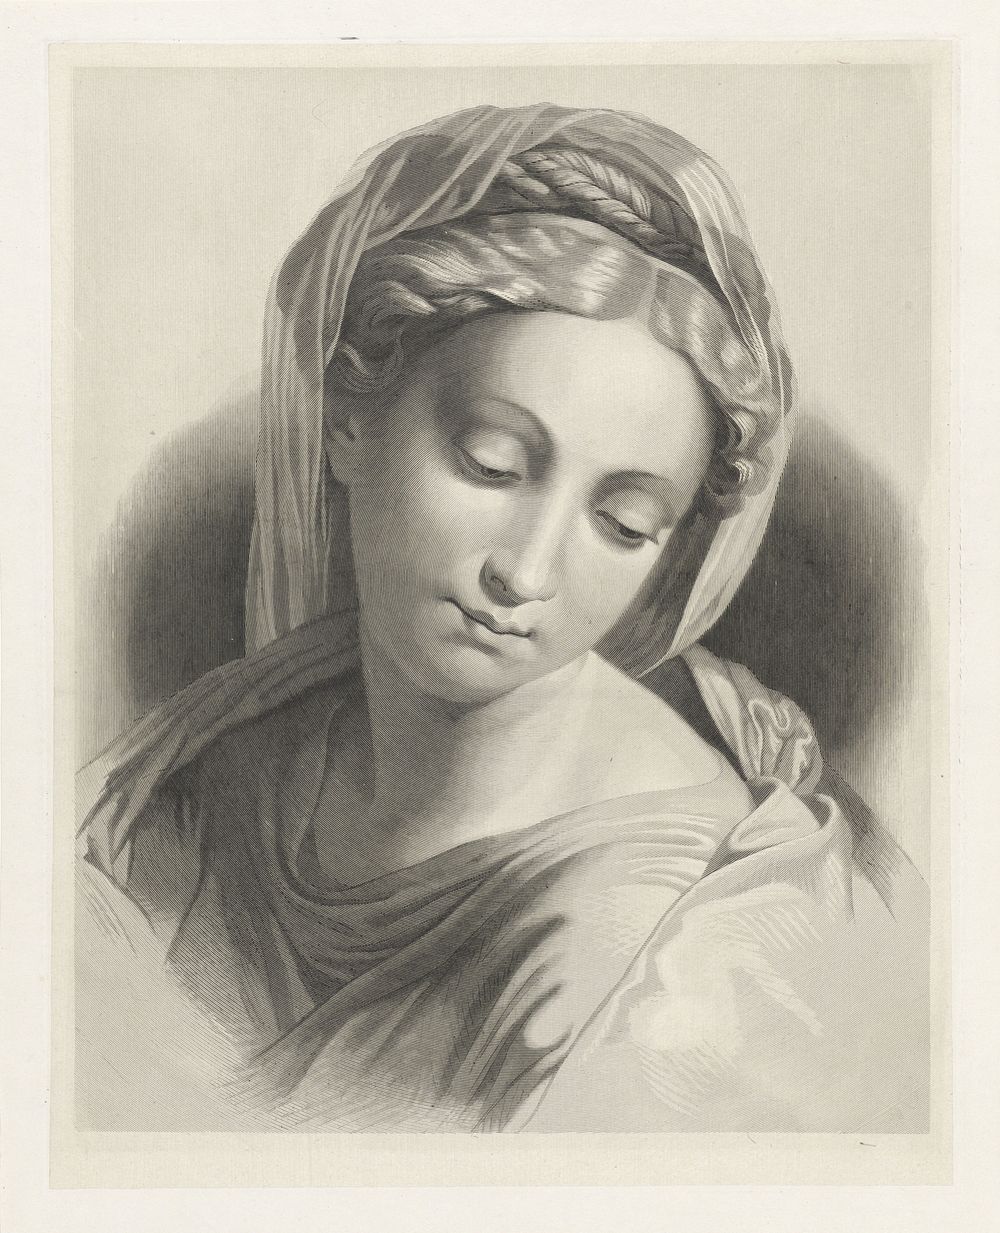 Madonna (1826 - 1886) by Dirk Jurriaan Sluyter